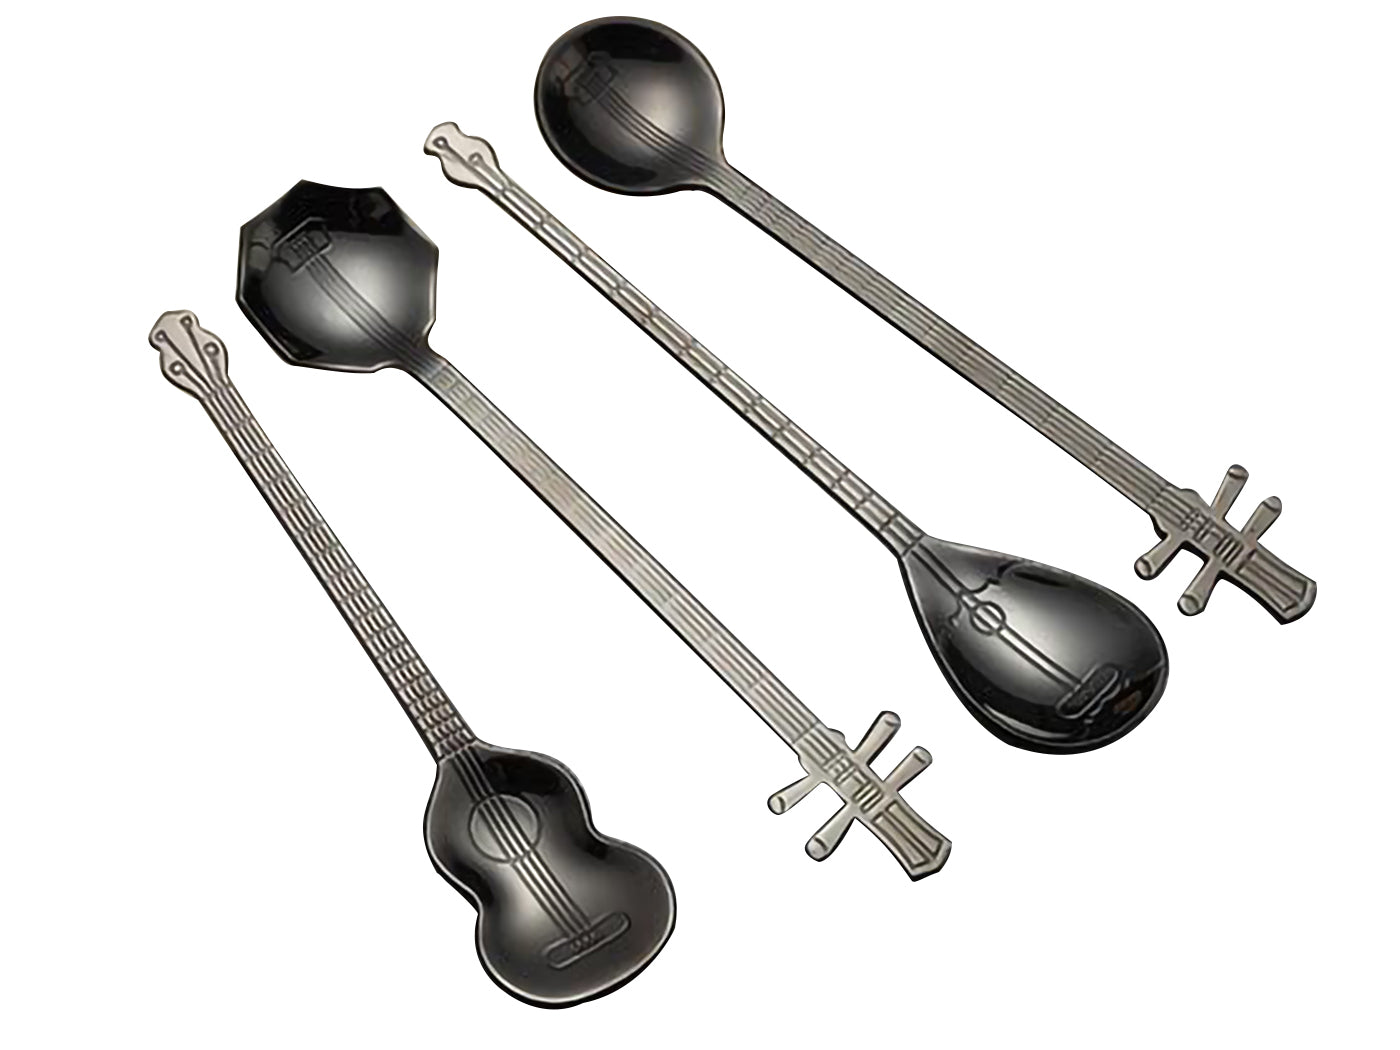 Guitar Spoon Set, 4 PCS Stainless Steel